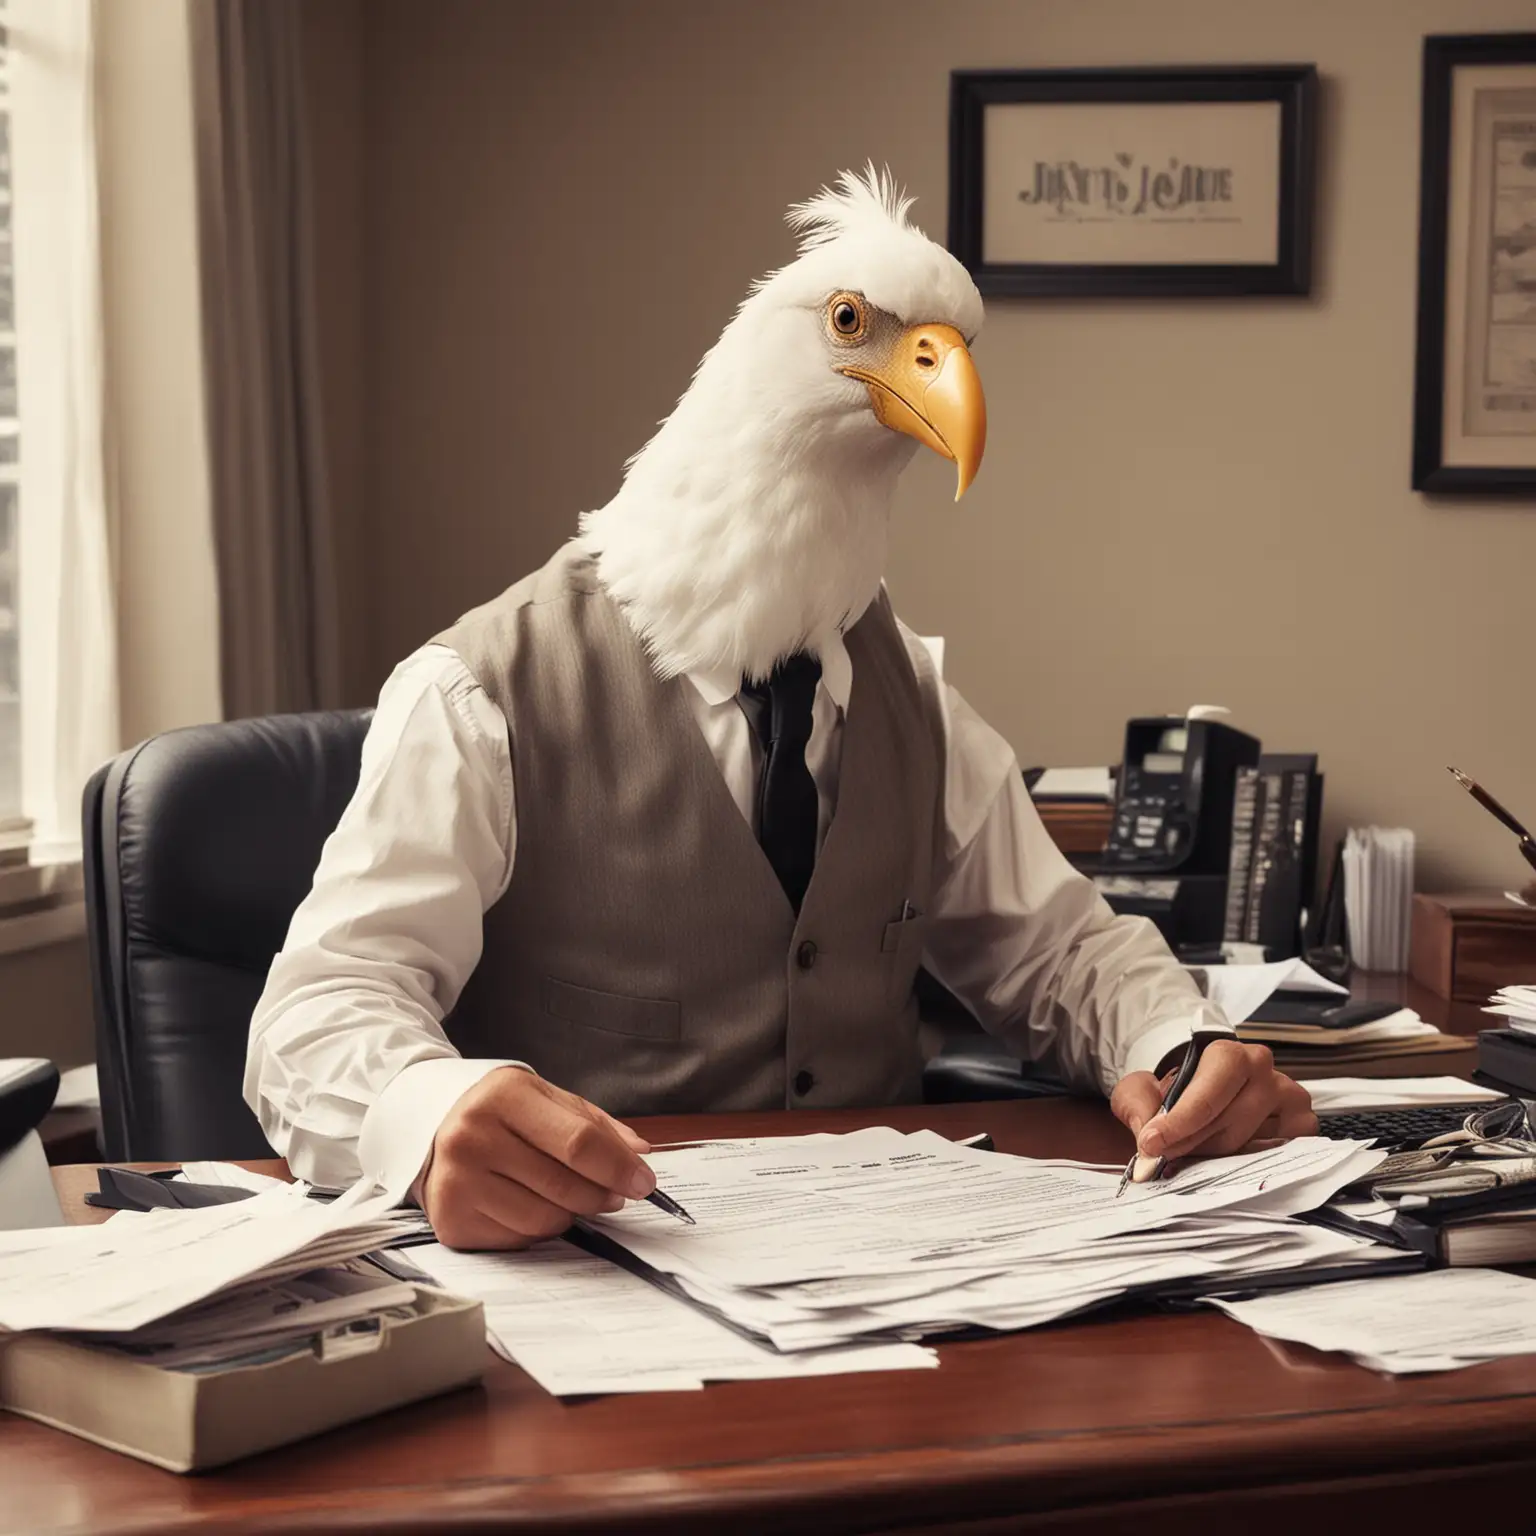 A half man half bird doing his taxes in his office